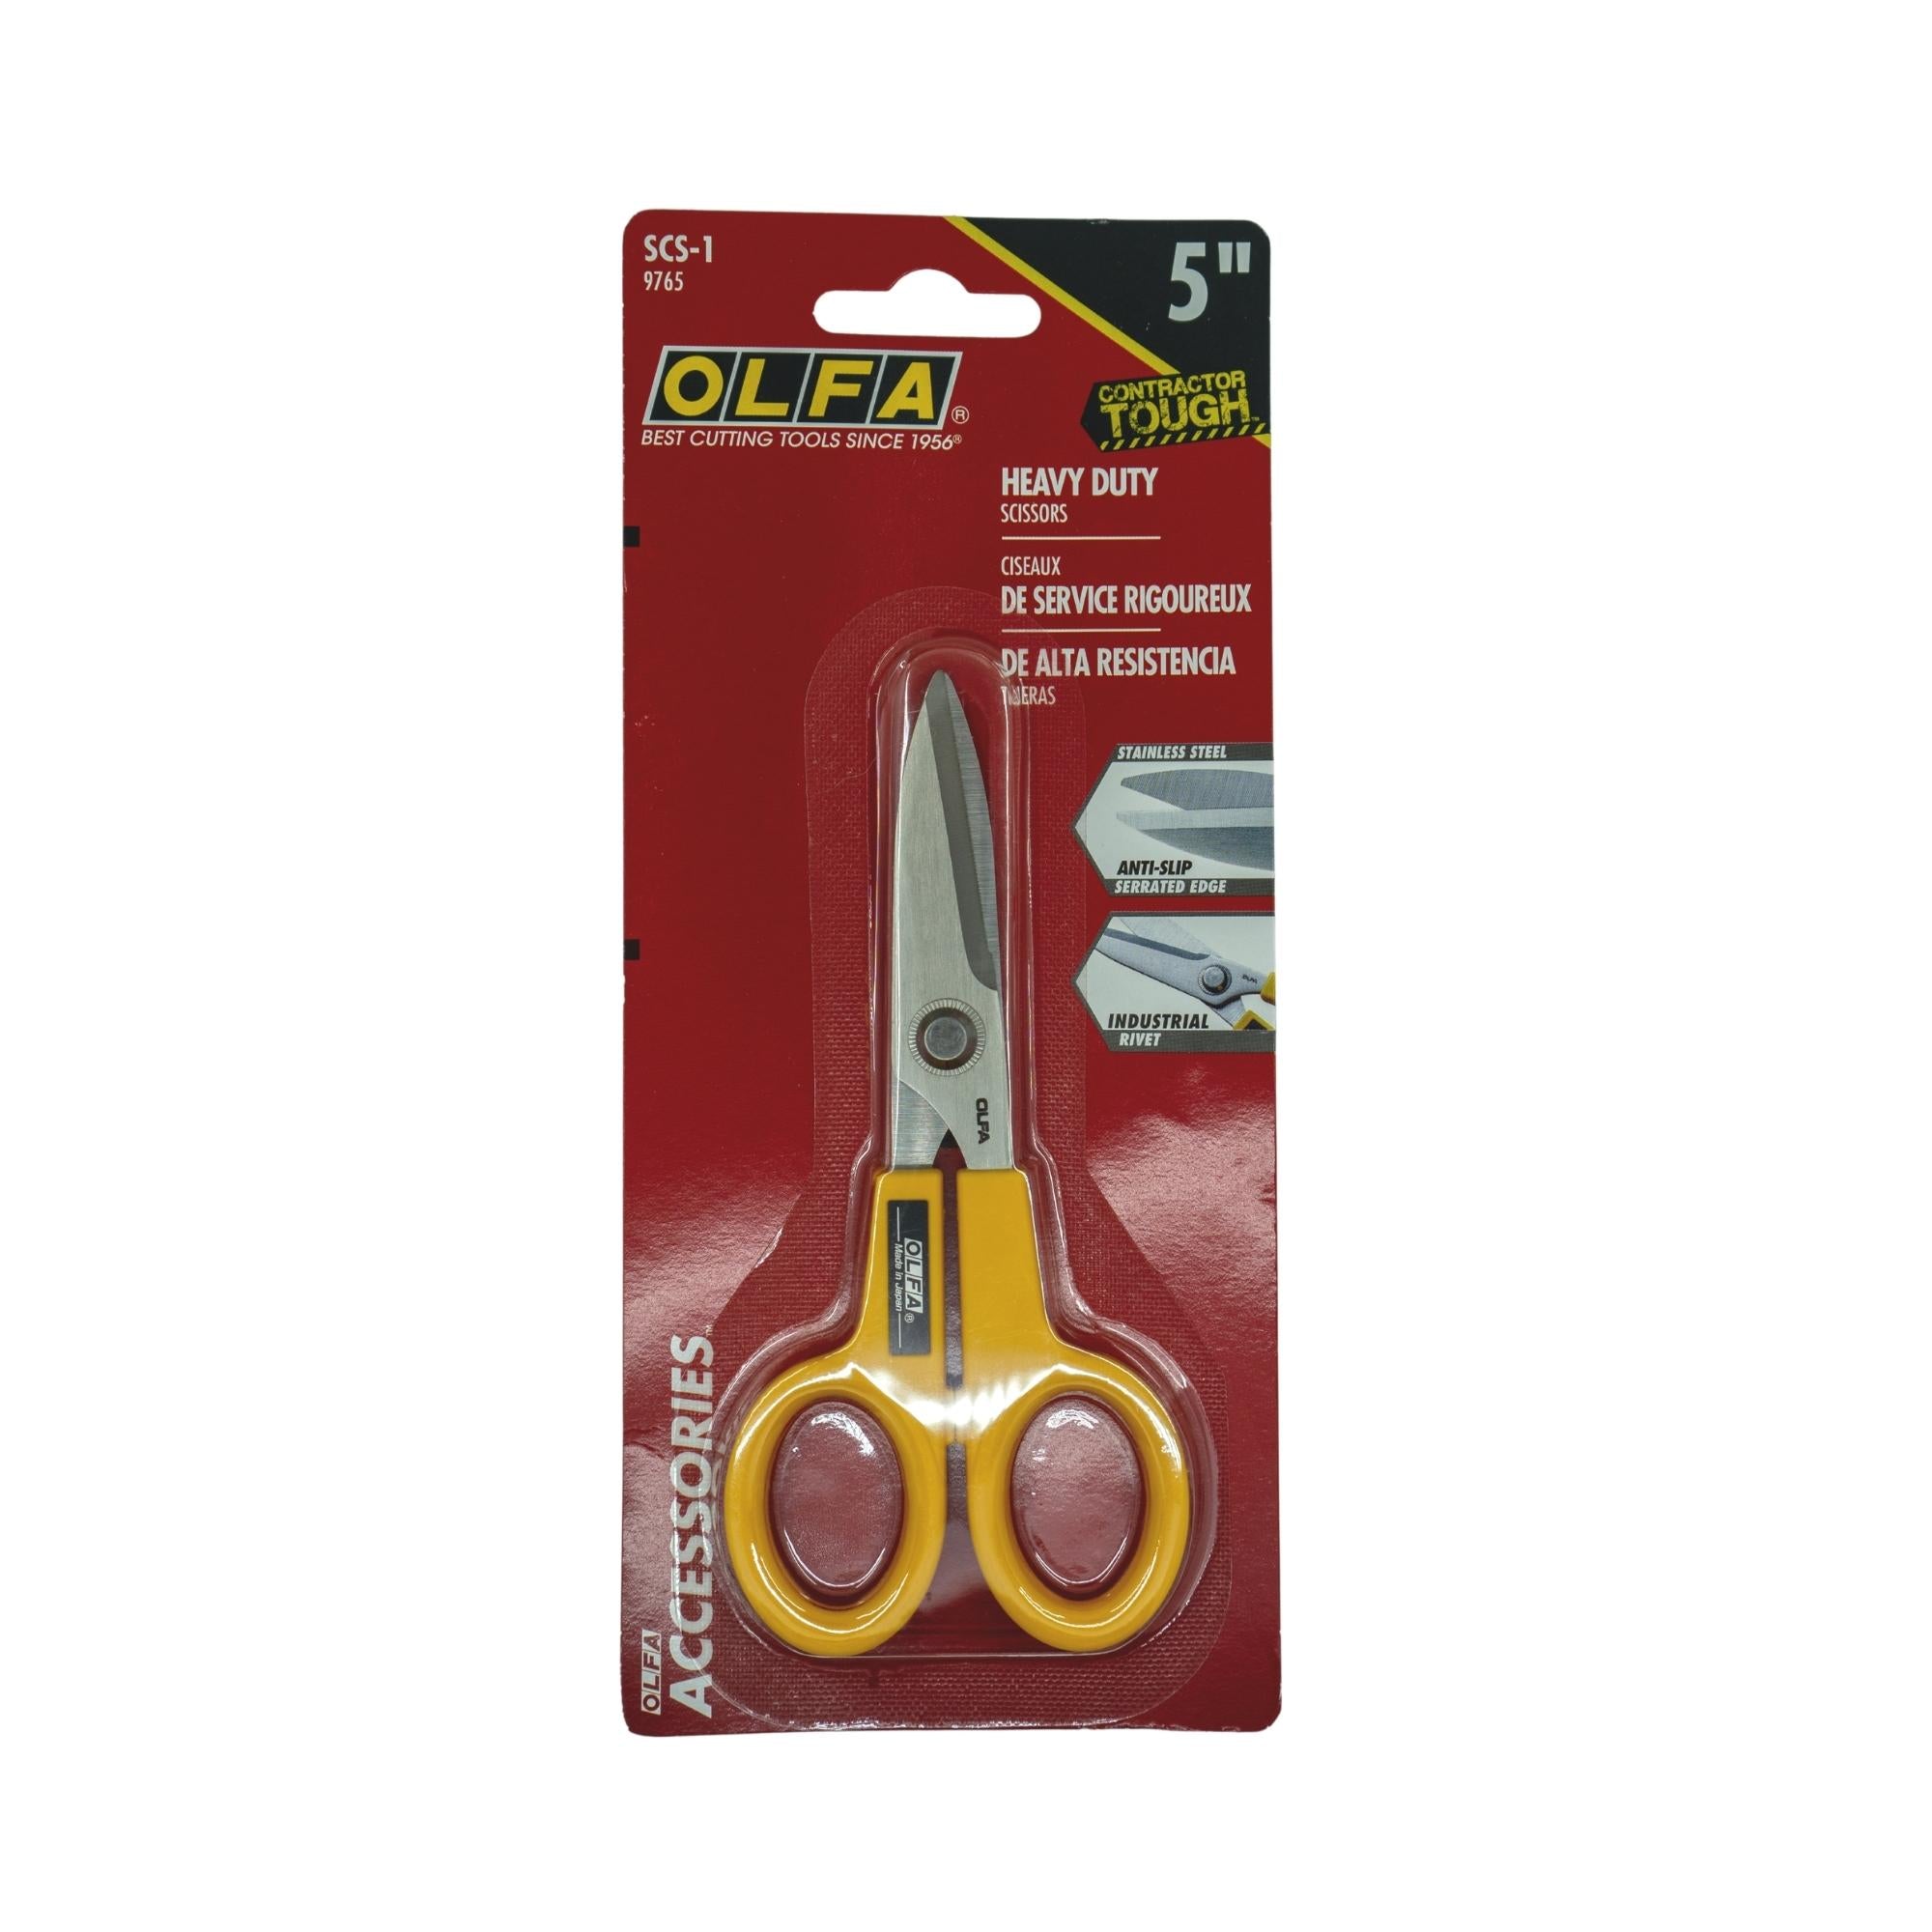 Japanese OLFA scissors, stainless steel, office, home, office